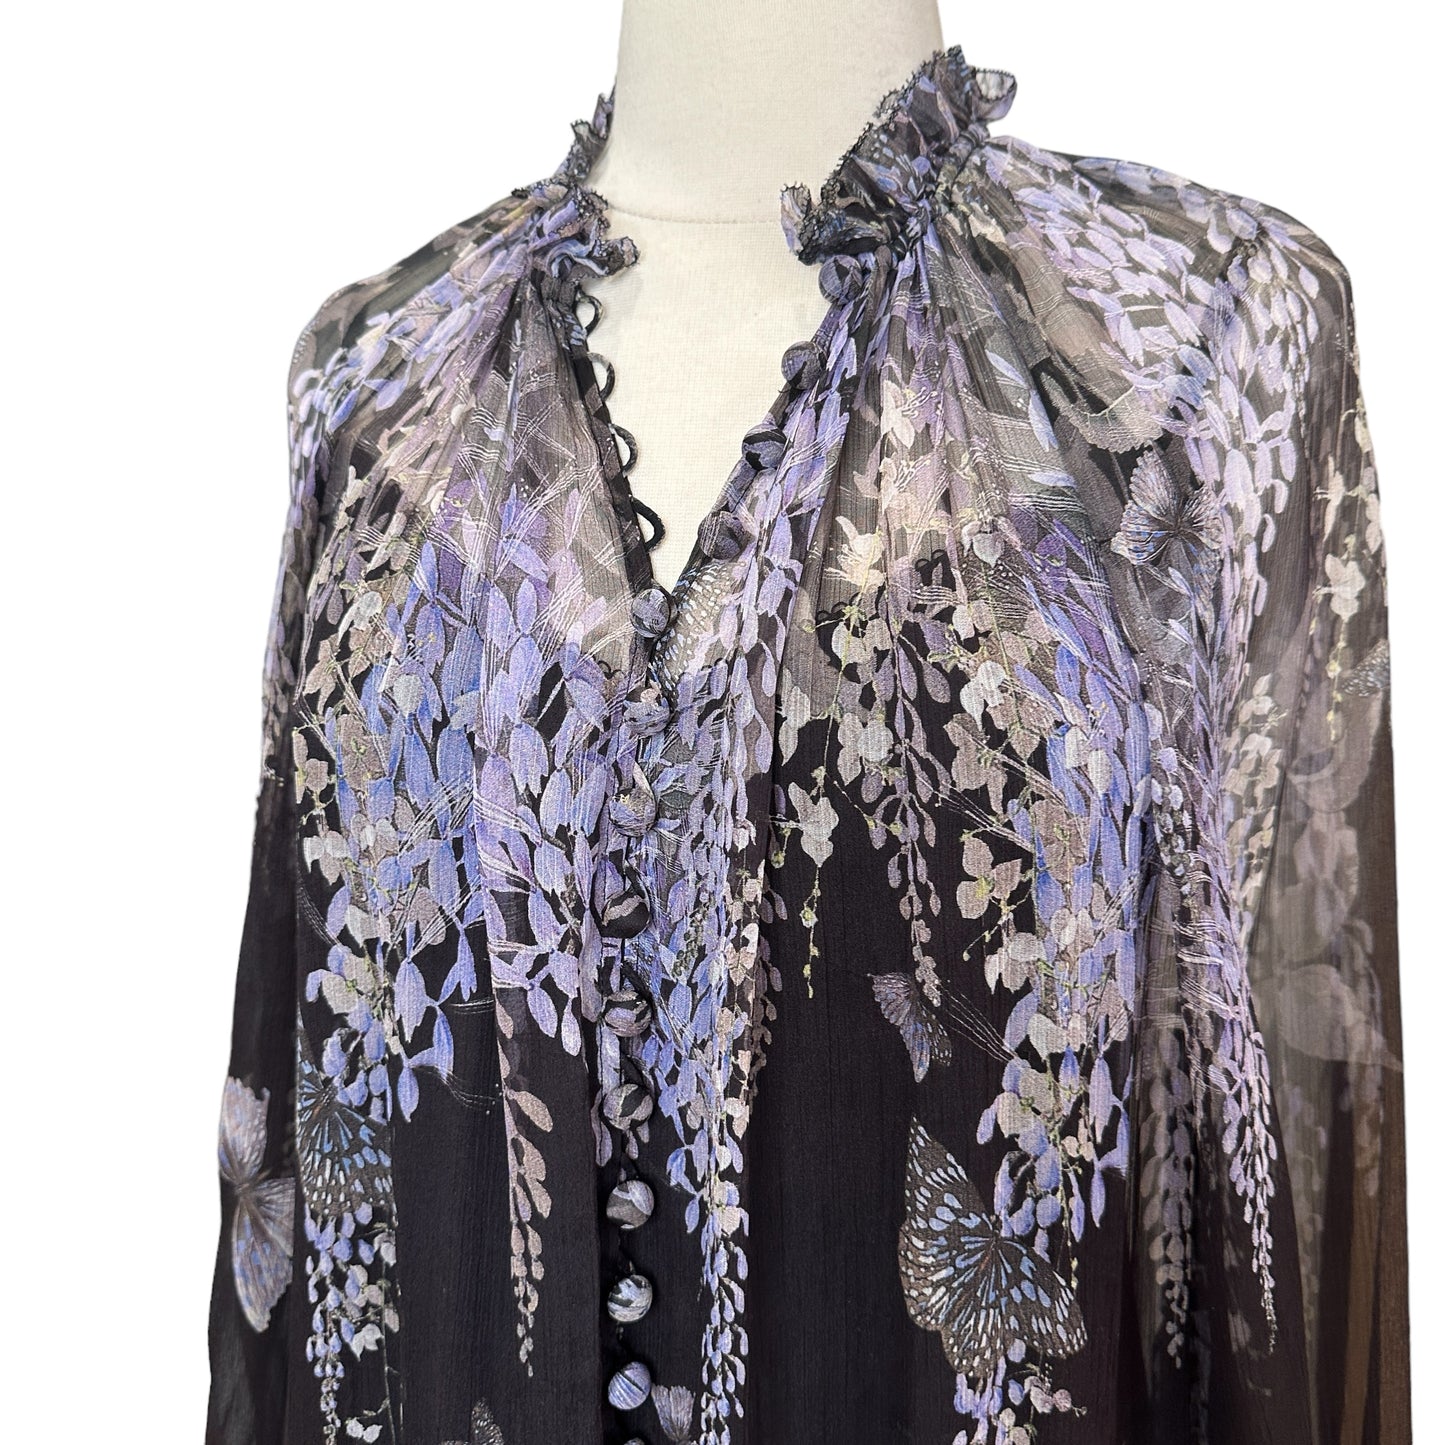 Silk Floral Dress - S/M